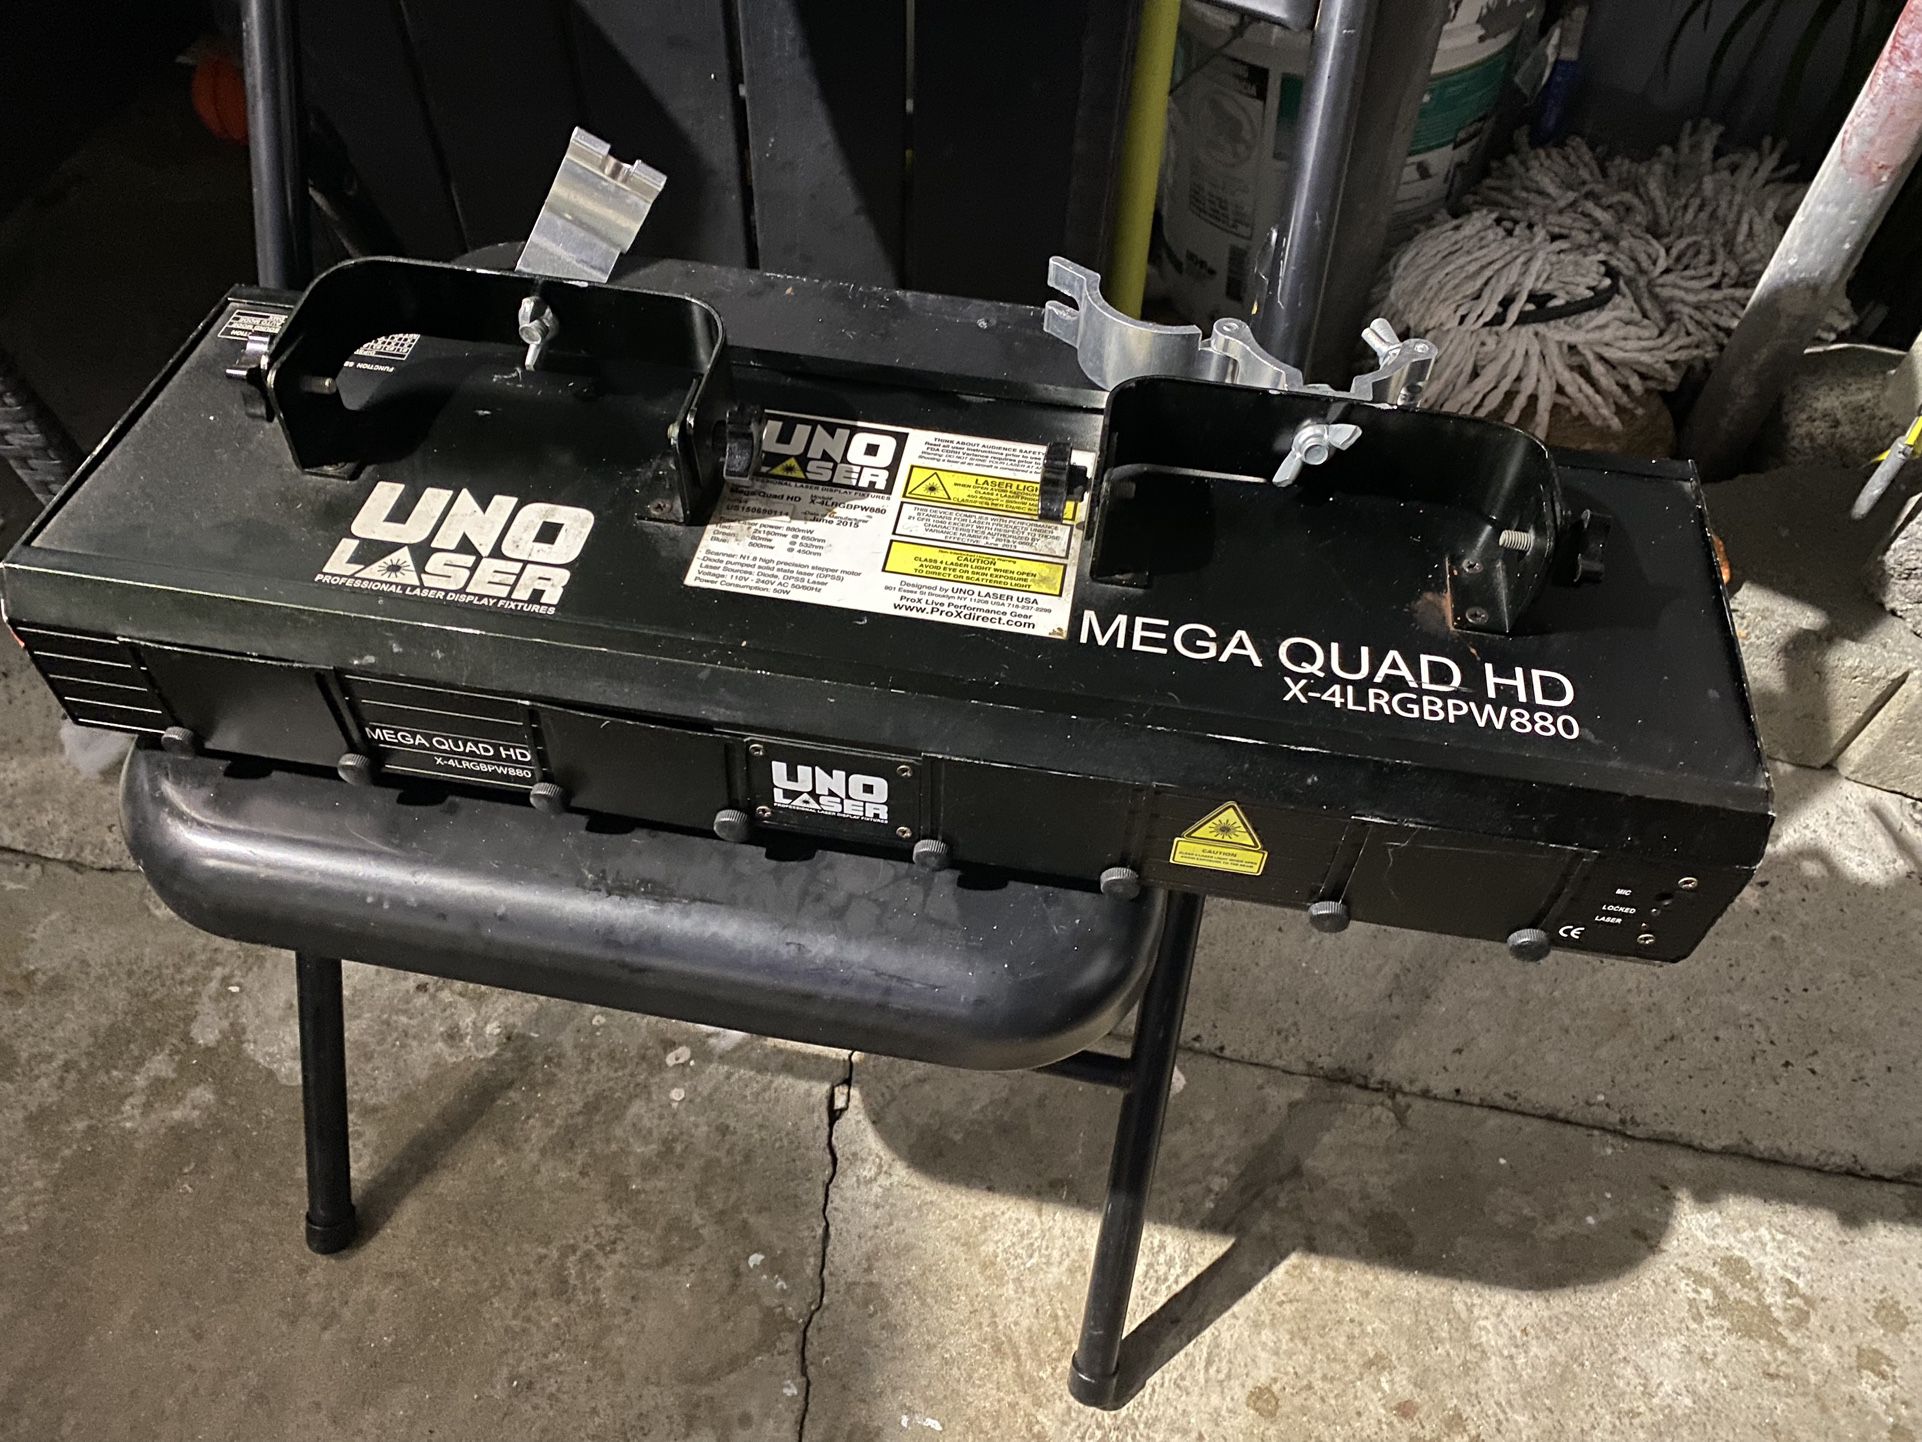 Uno Laser Mega Quad HD DJ Laser Show Machine